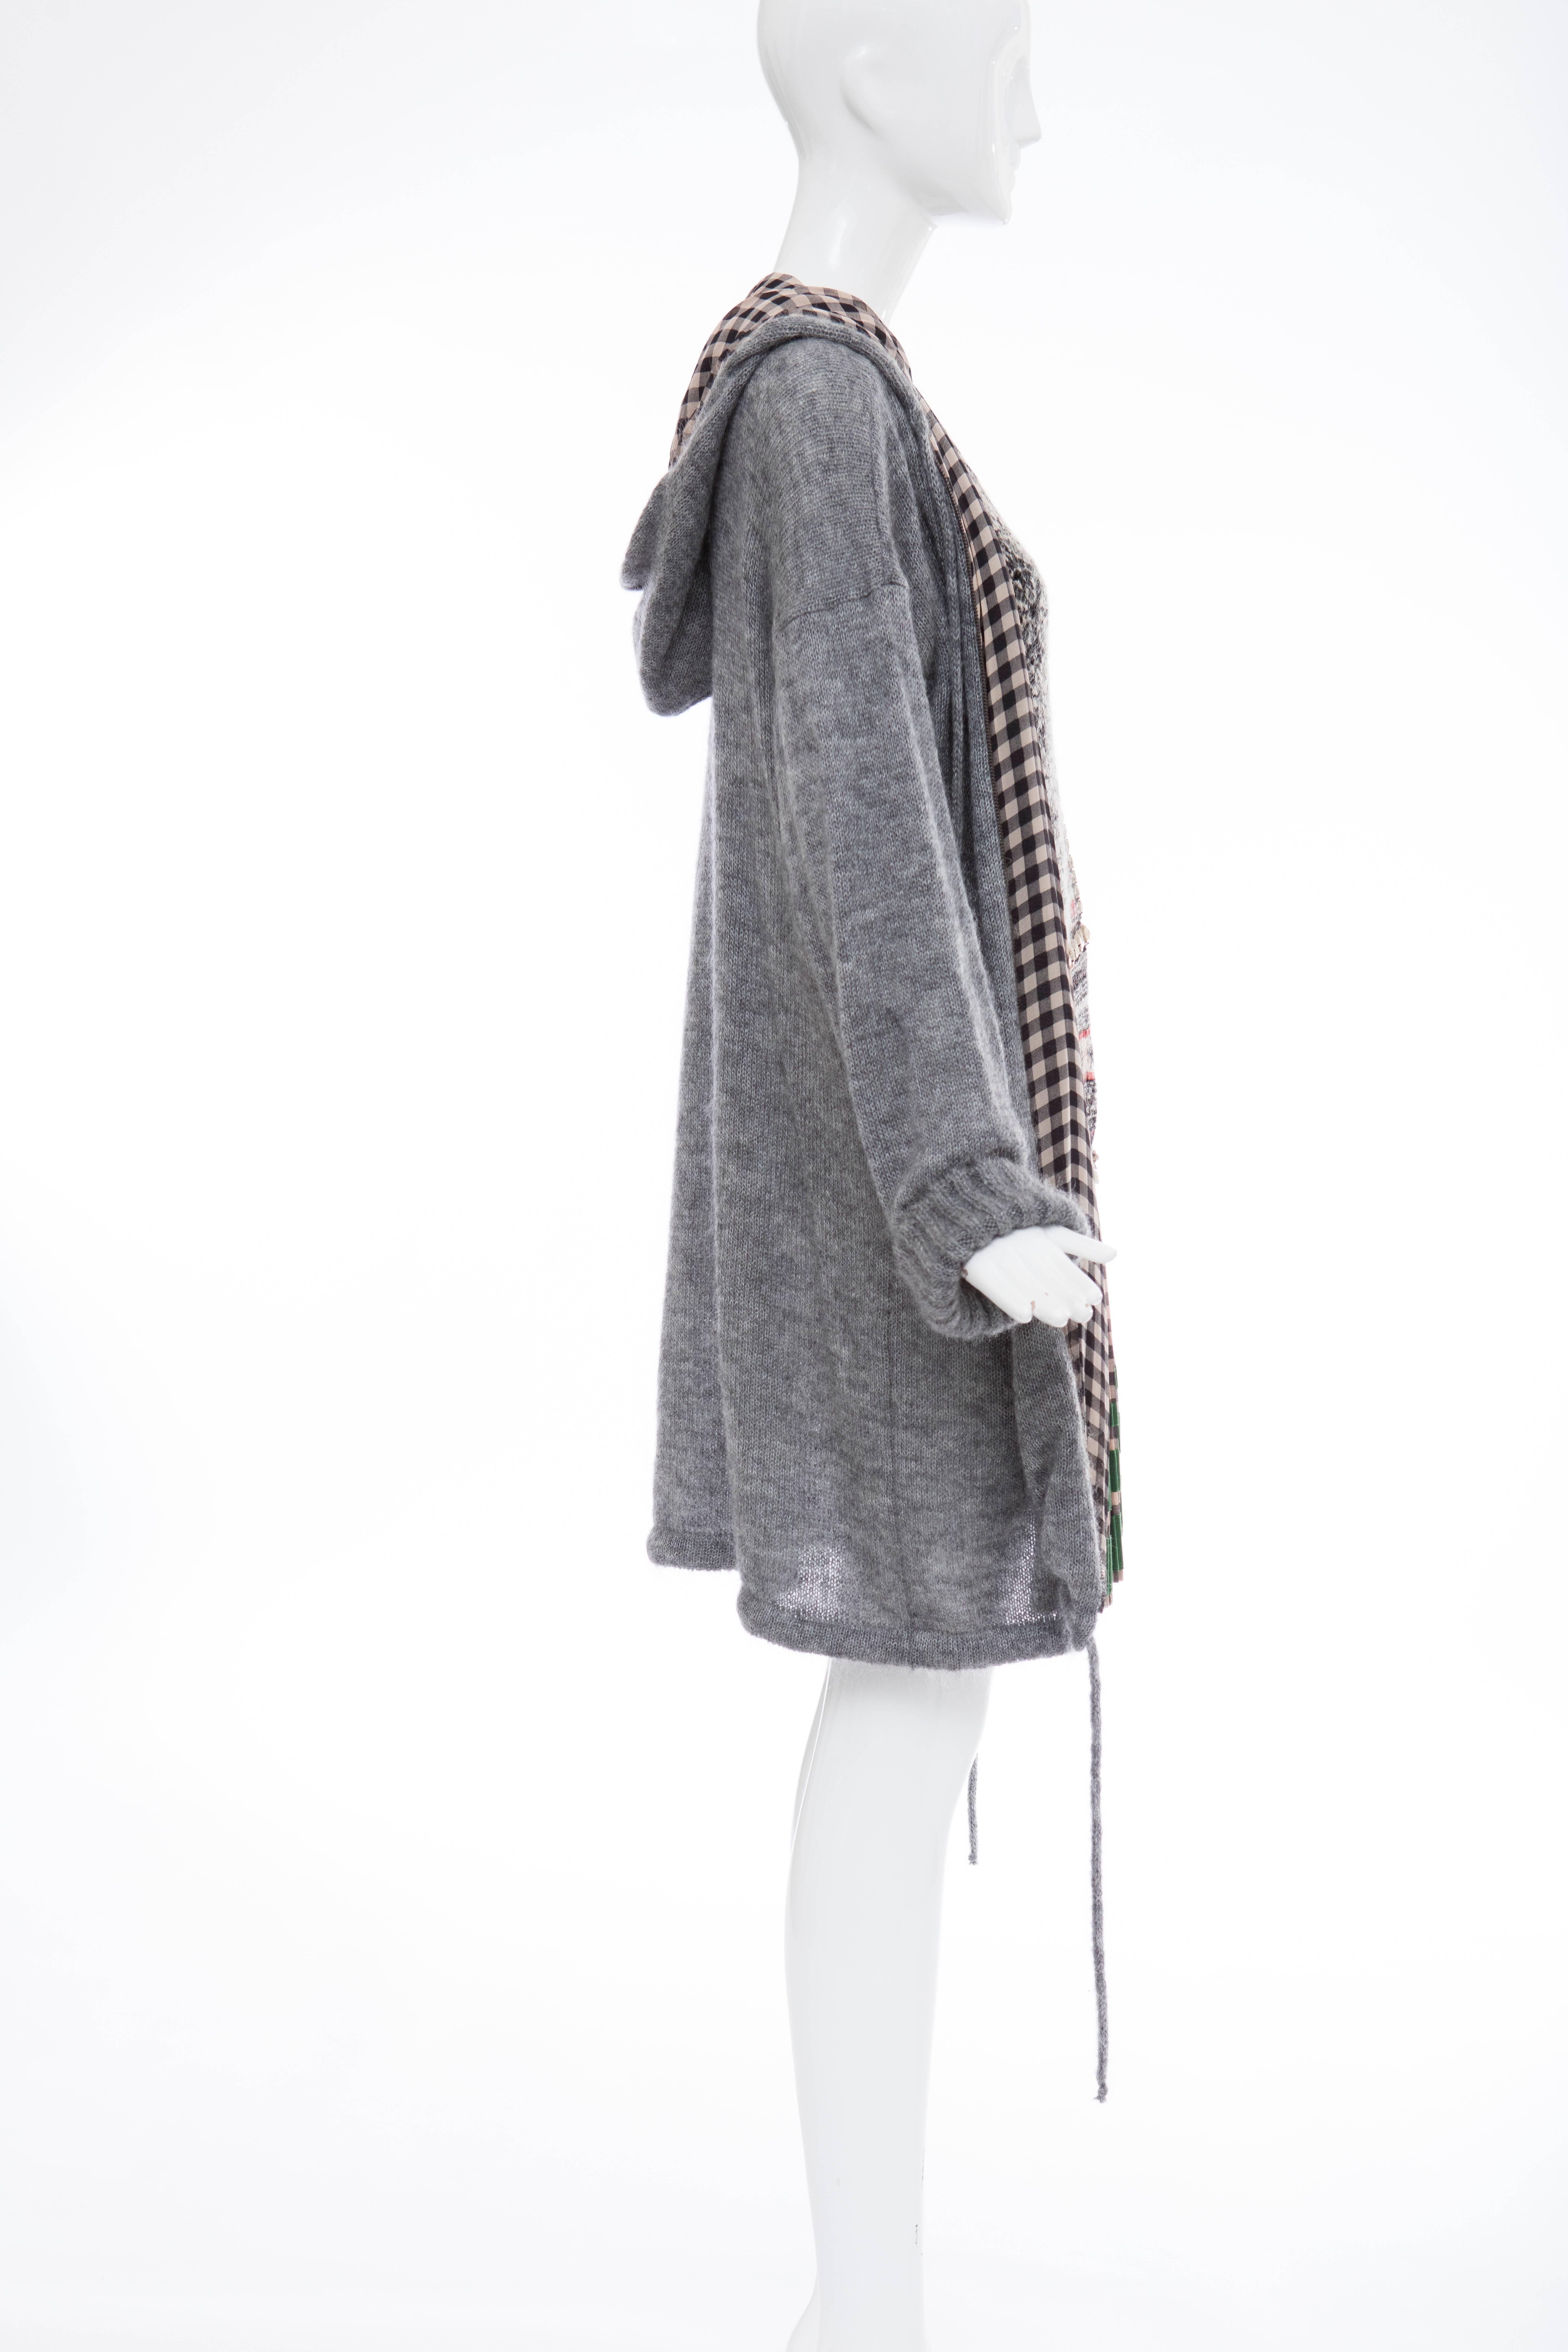 Gray Jean Paul Gaultier Mohair Nylon Knit Dress With Hood , Autumn - Winter 2010